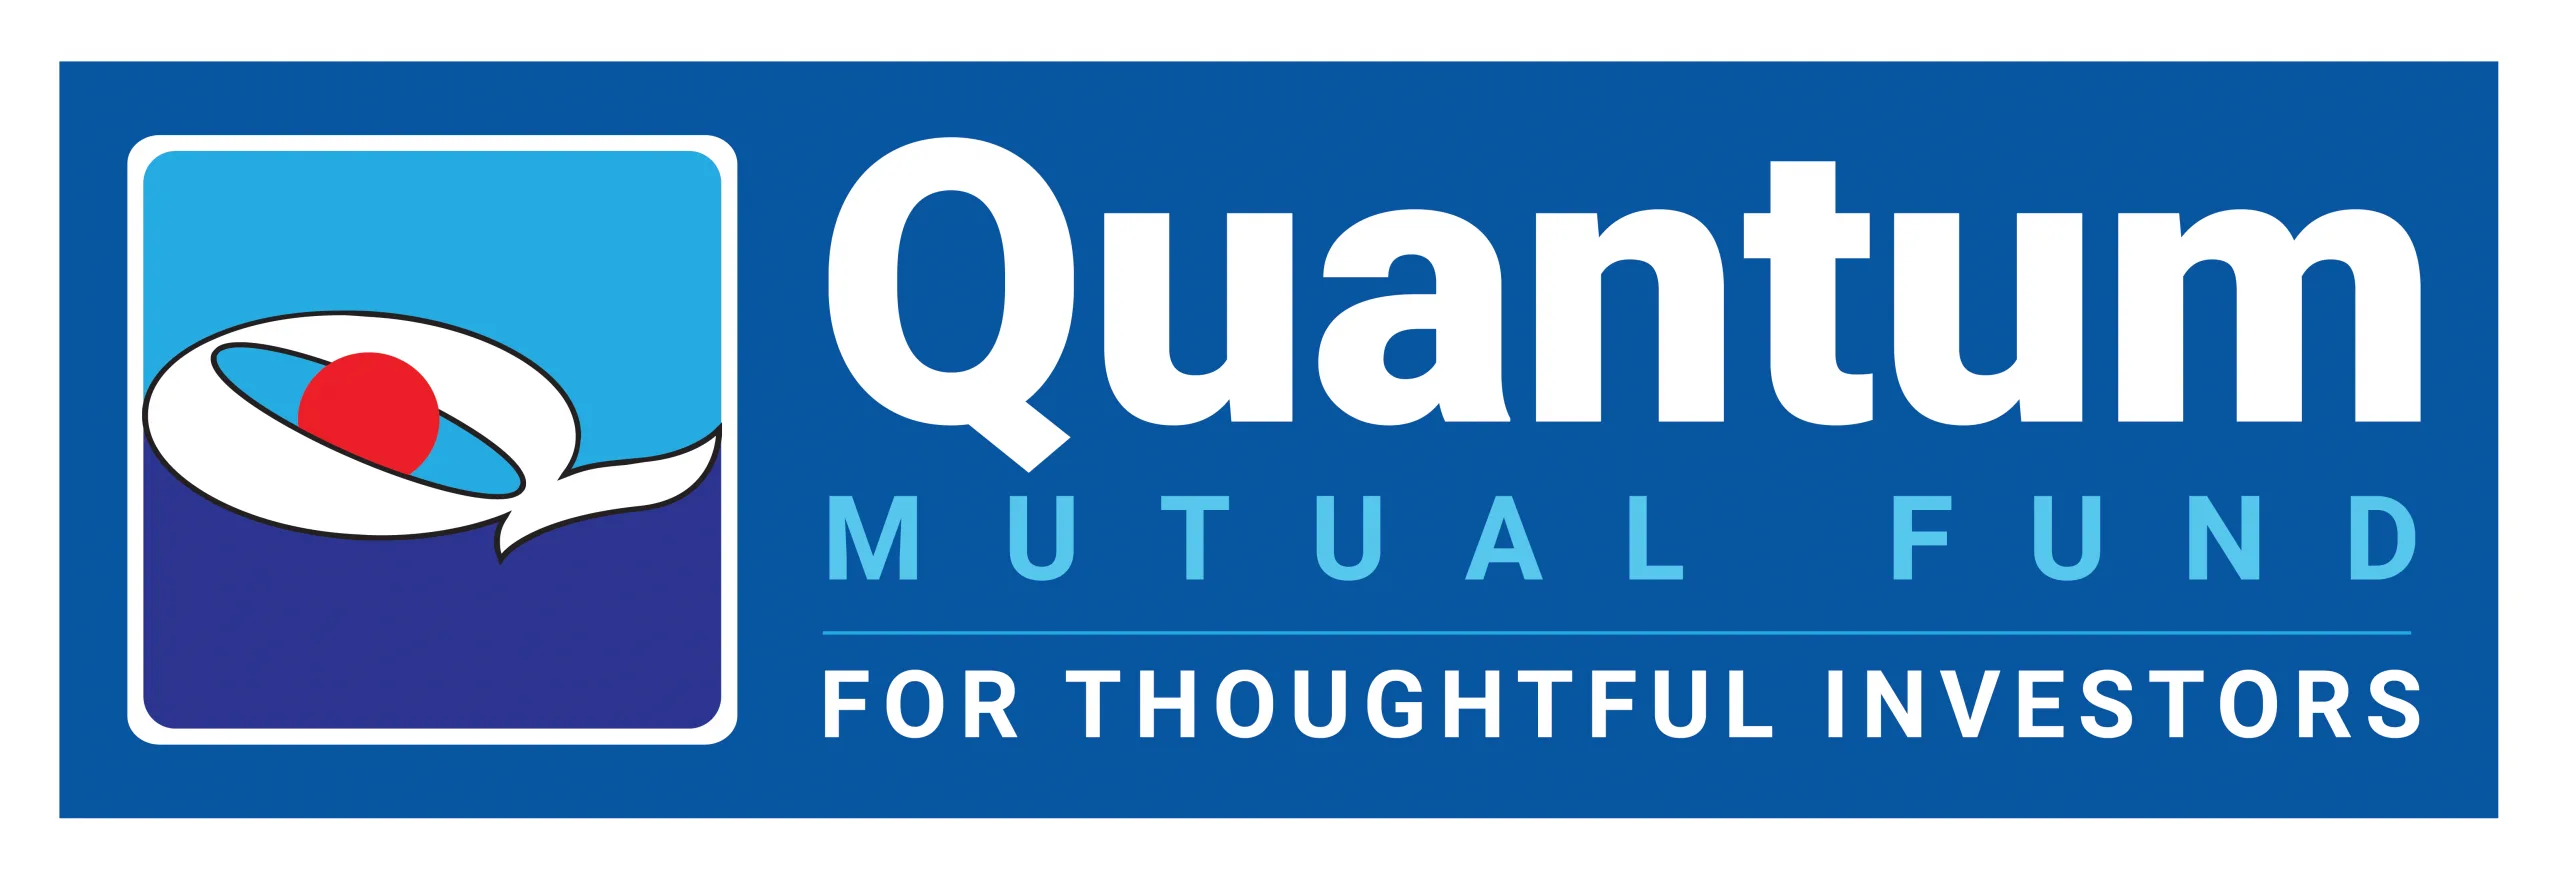 Quantum Logo PNG Transparent & SVG Vector - Freebie Supply